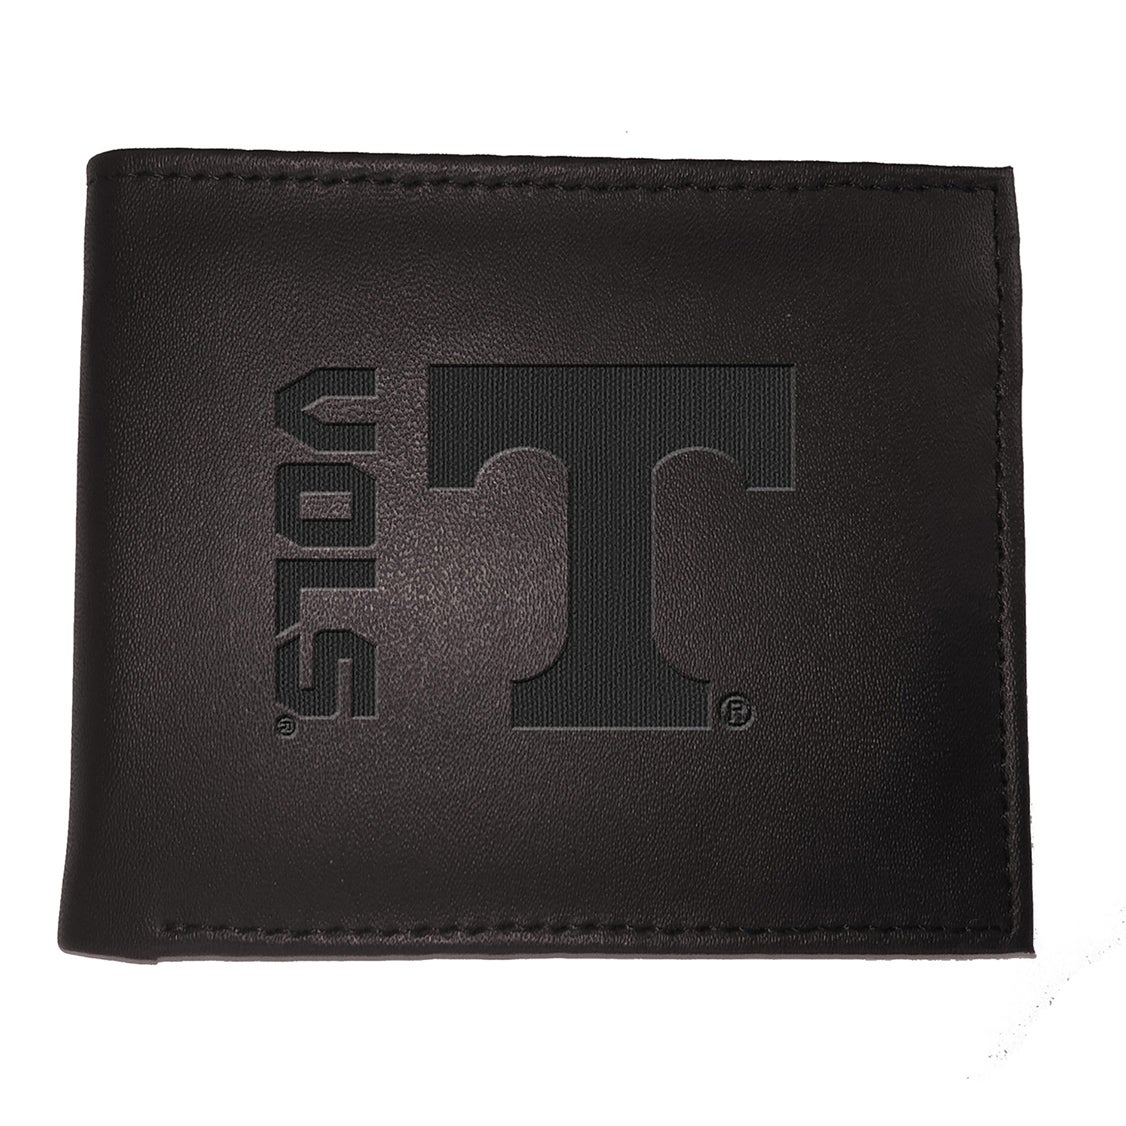 University of Tennessee Bi-Fold Leather Wallet